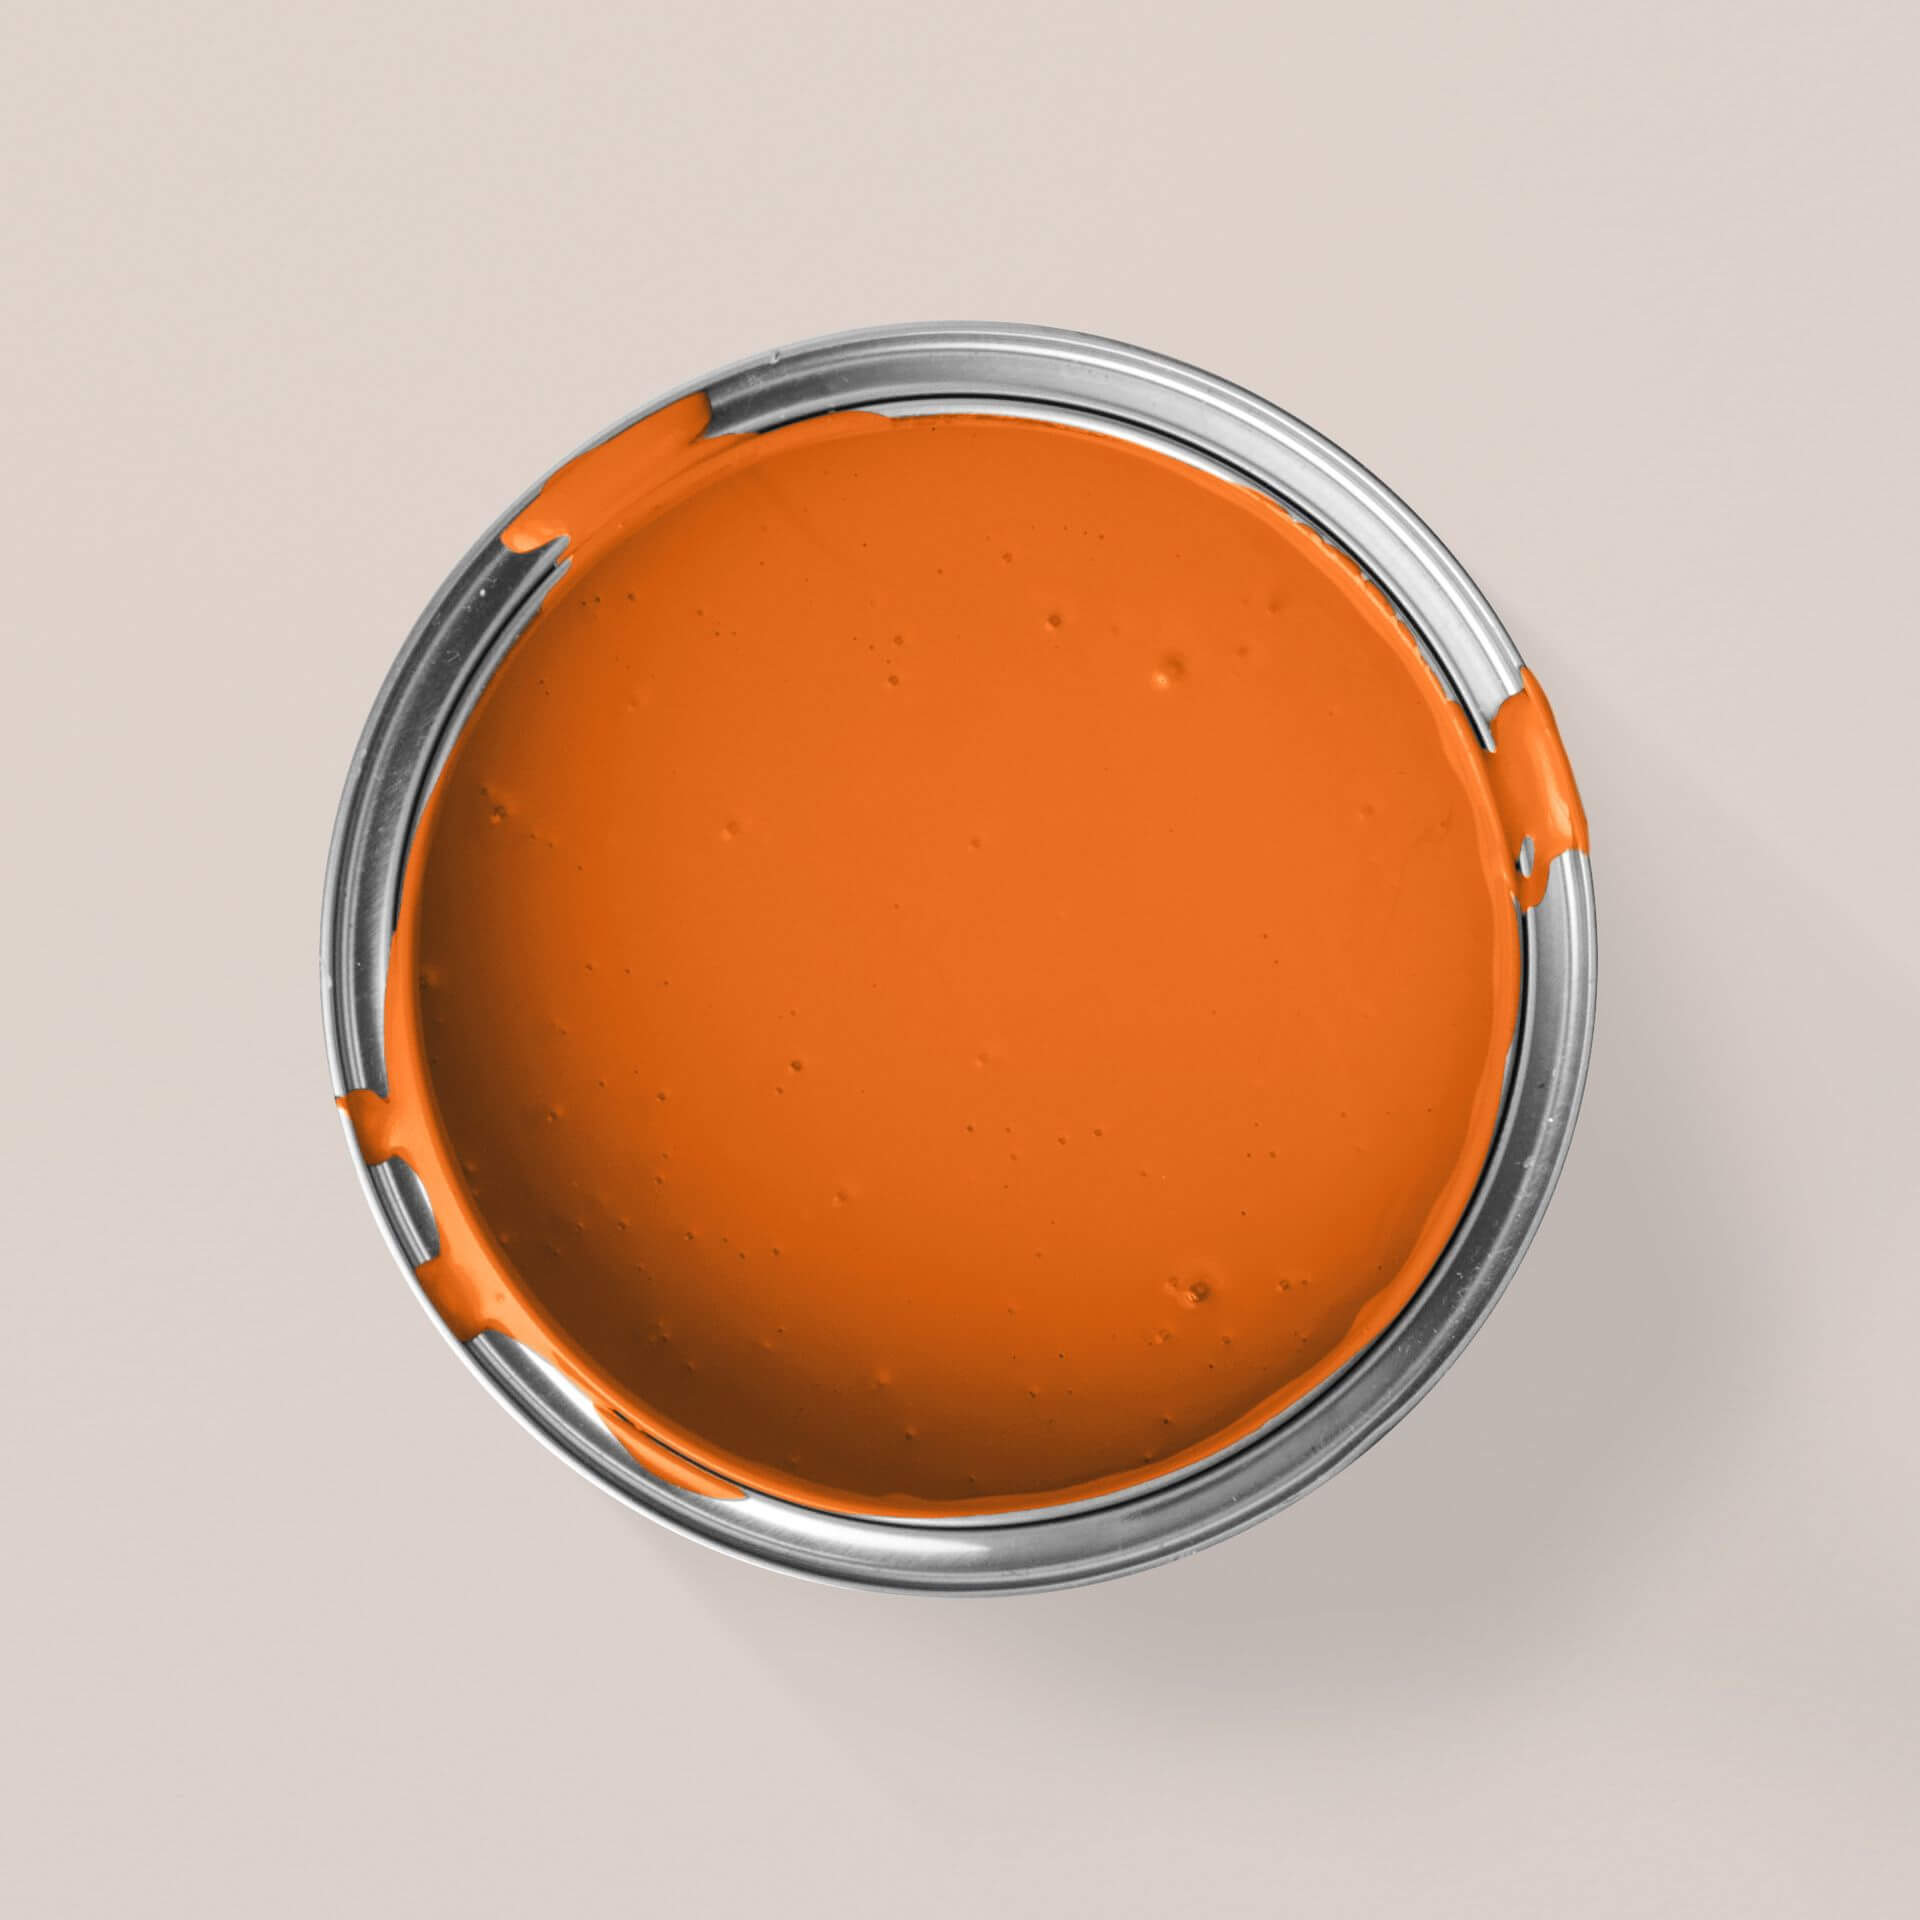 MissPompadour Oranje met Mandarijn - Afwasbare muurverf 2.5L